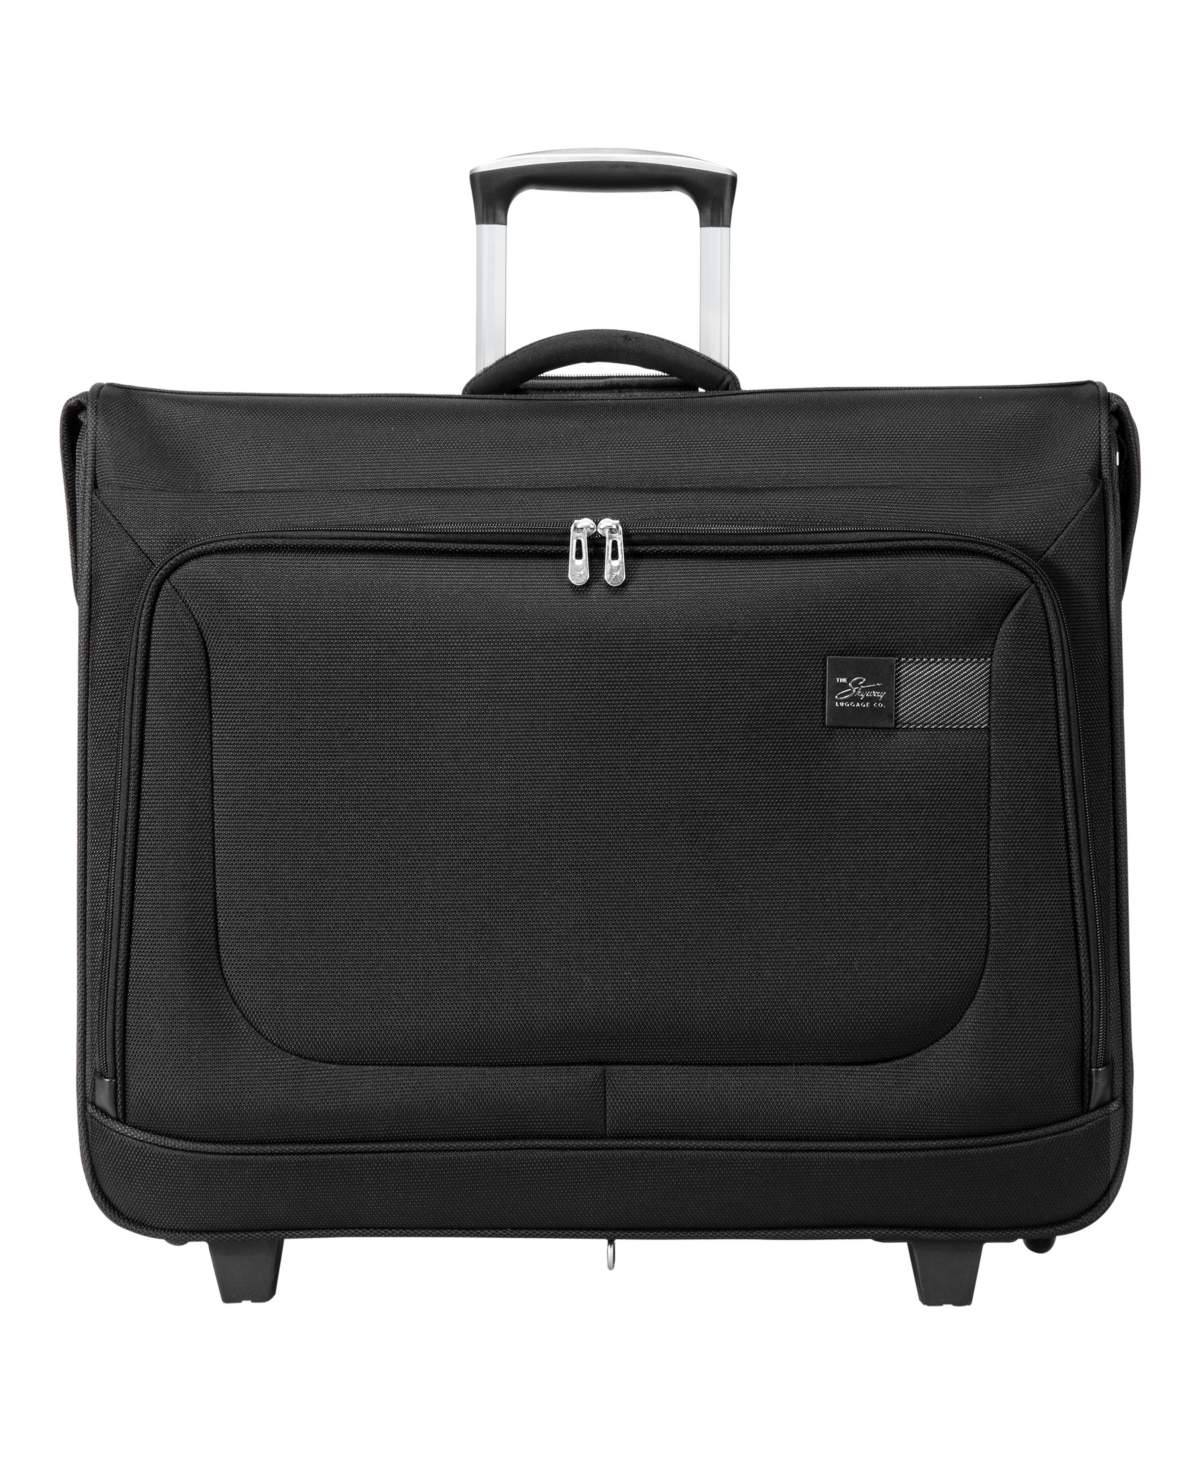 Sigma 6 2-Wheel Rolling Garment Bag - Black